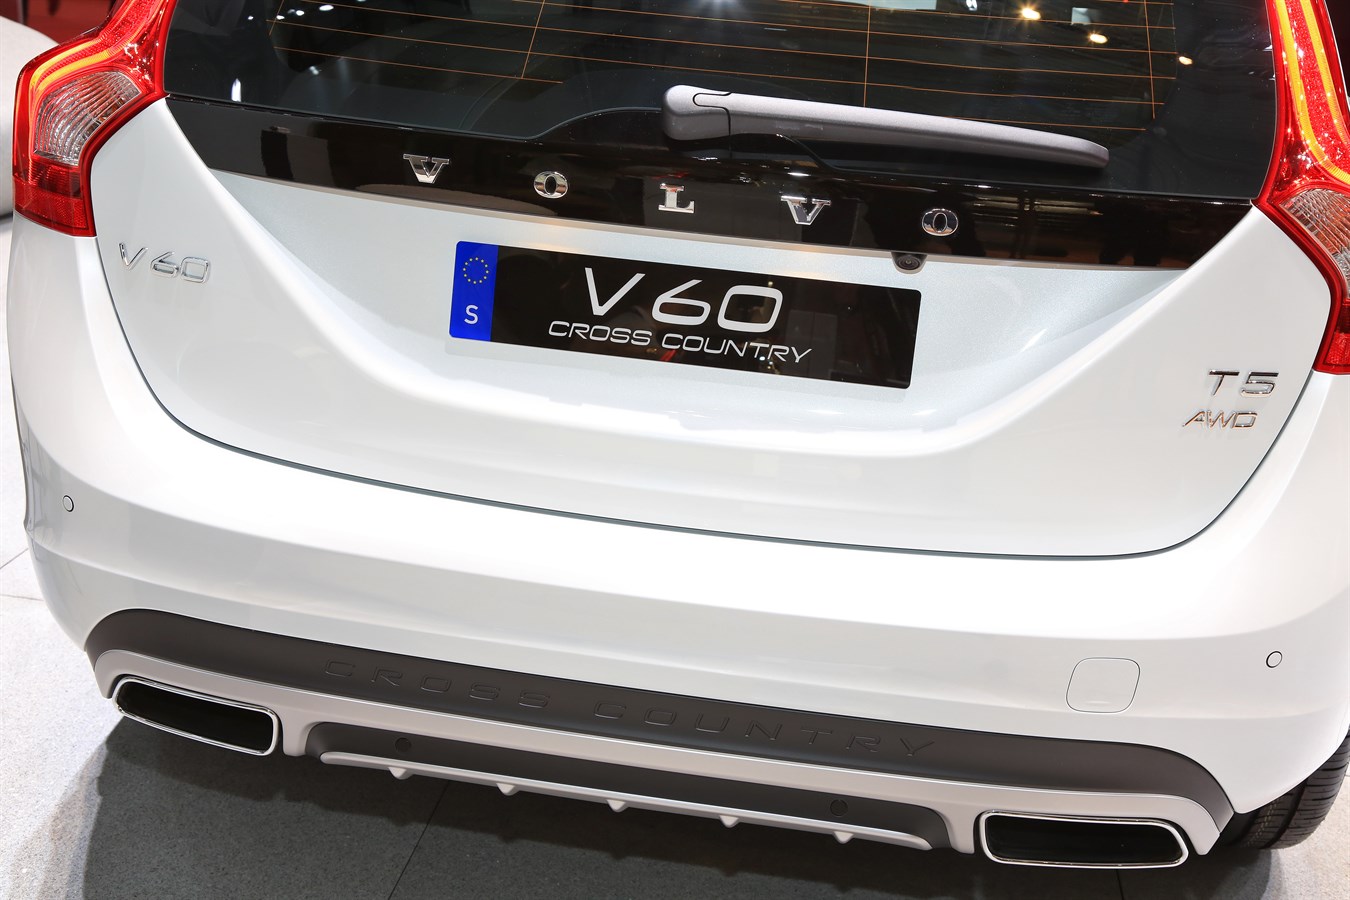 Volvo salon de Genève 2015